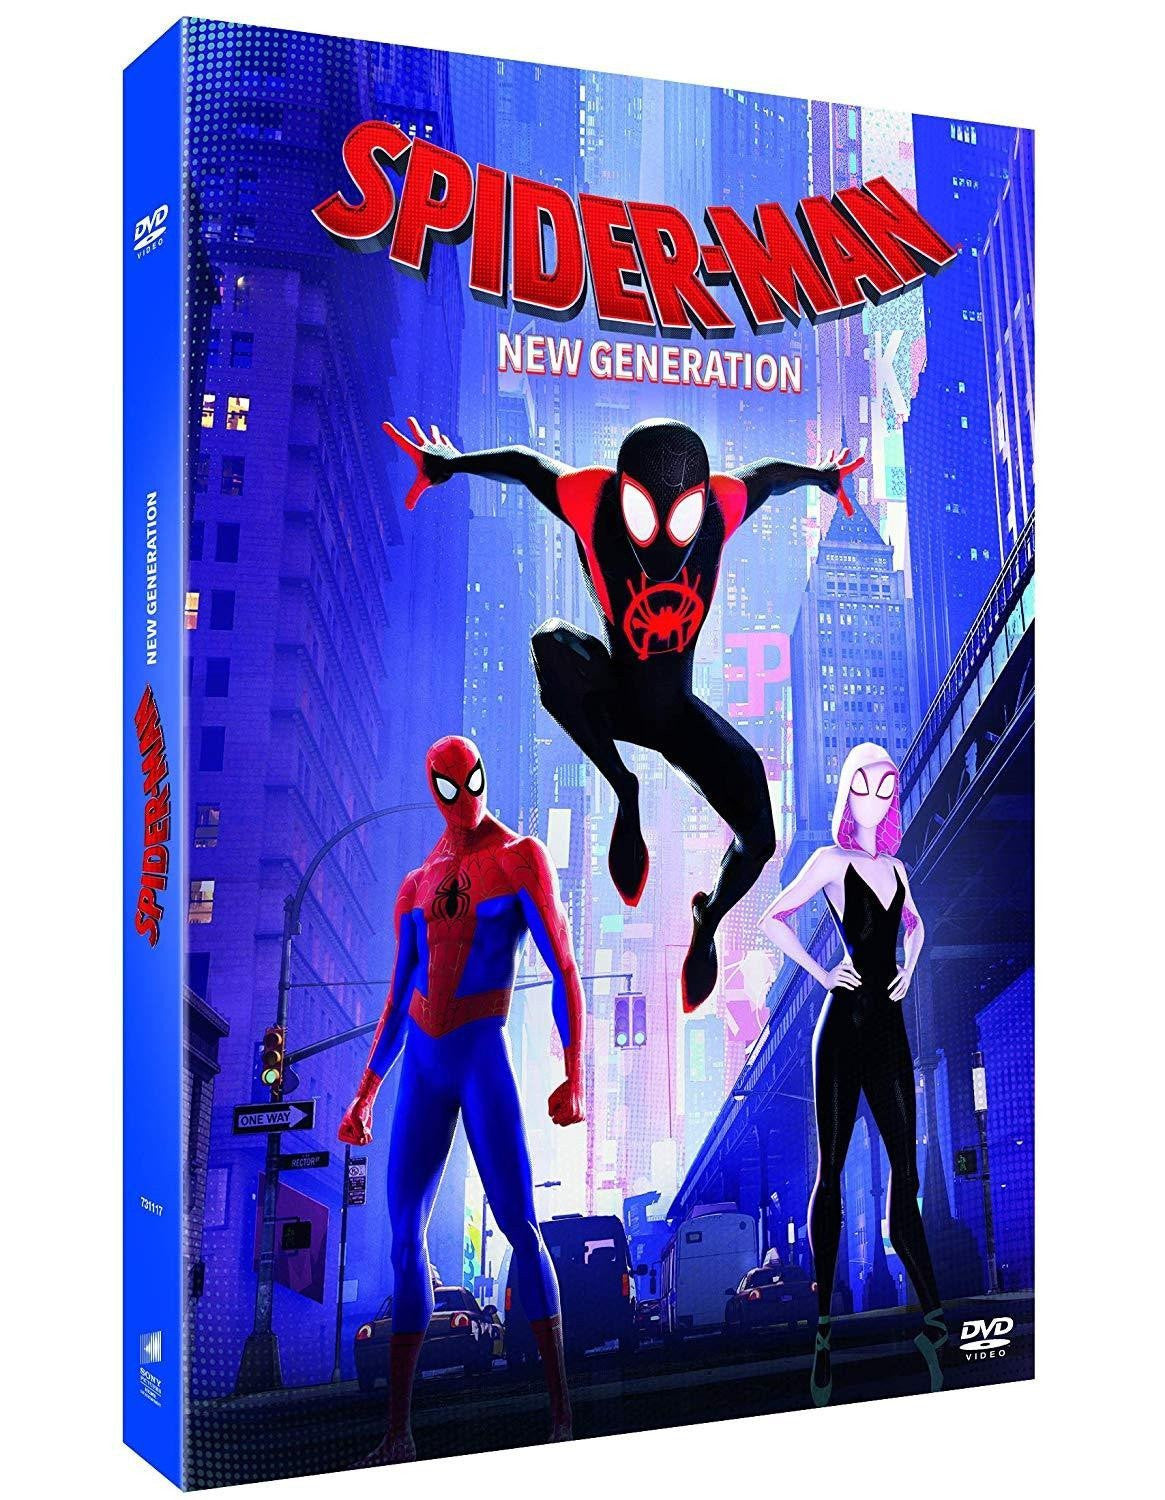 flashvideofilm - Spider-Man : New Generation " DVD à la location " - Location